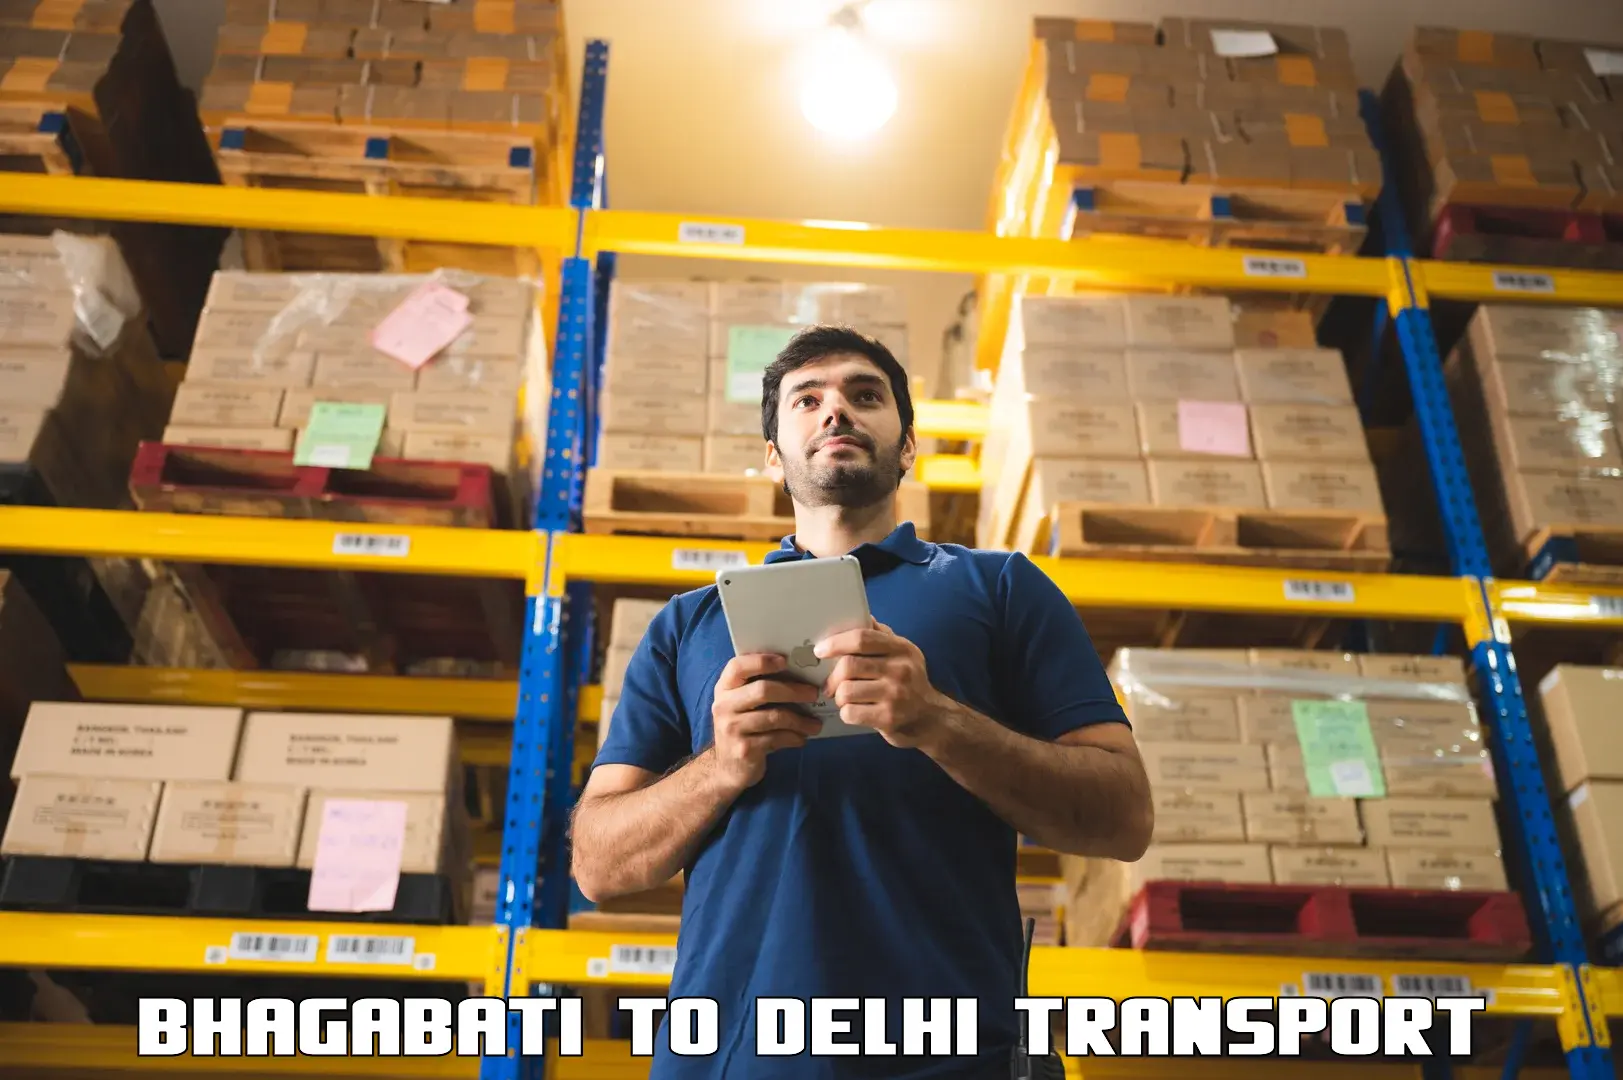 Shipping partner Bhagabati to East Delhi